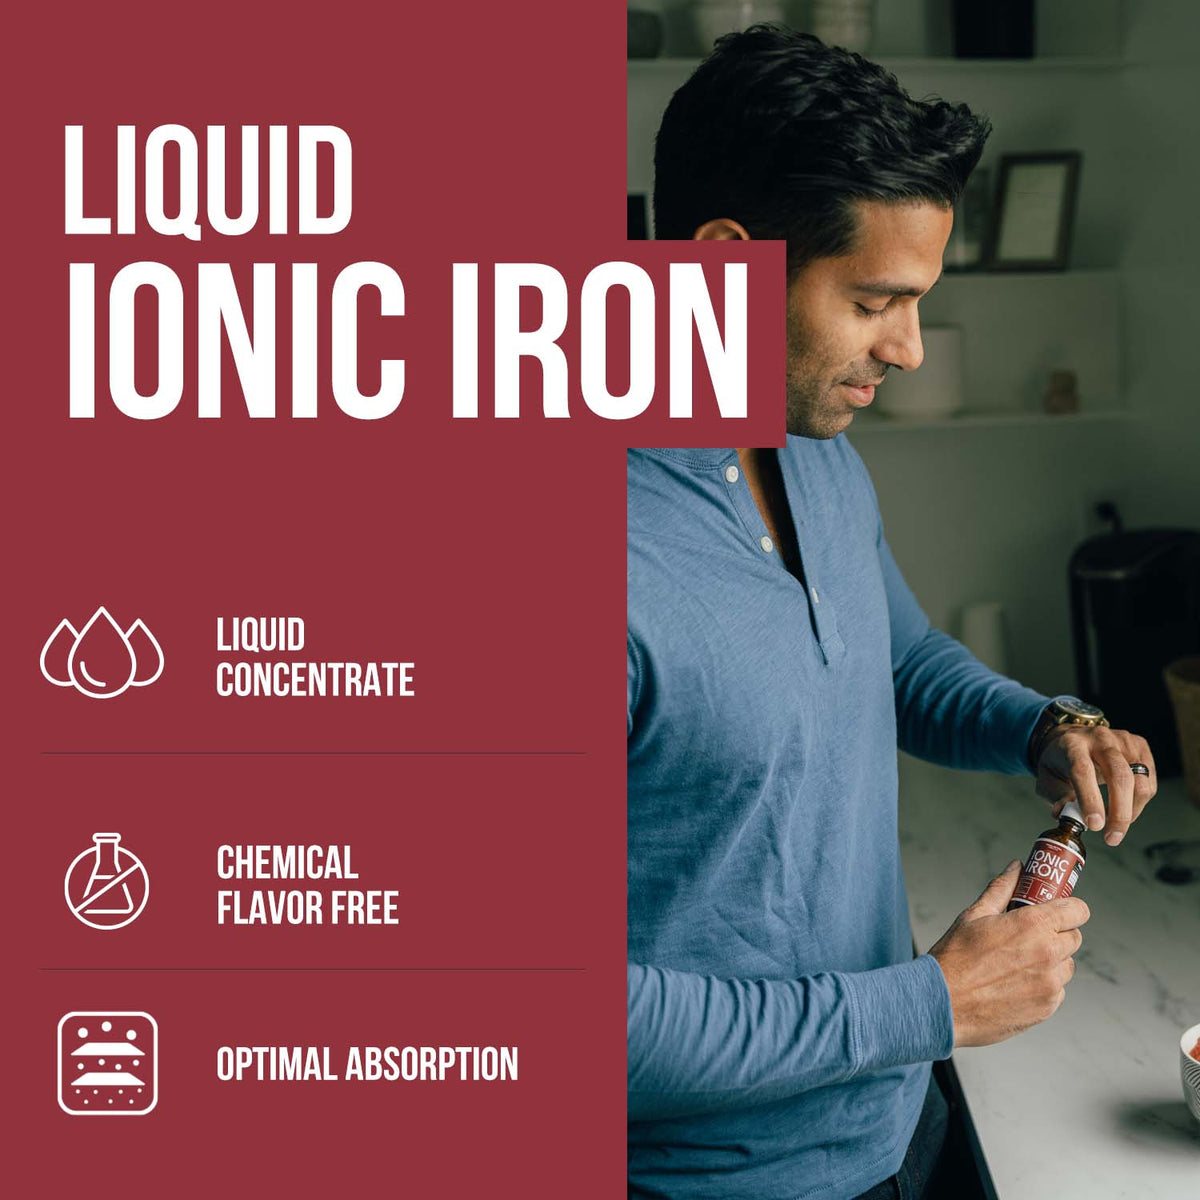 Ionic Iron Liquid Supplement